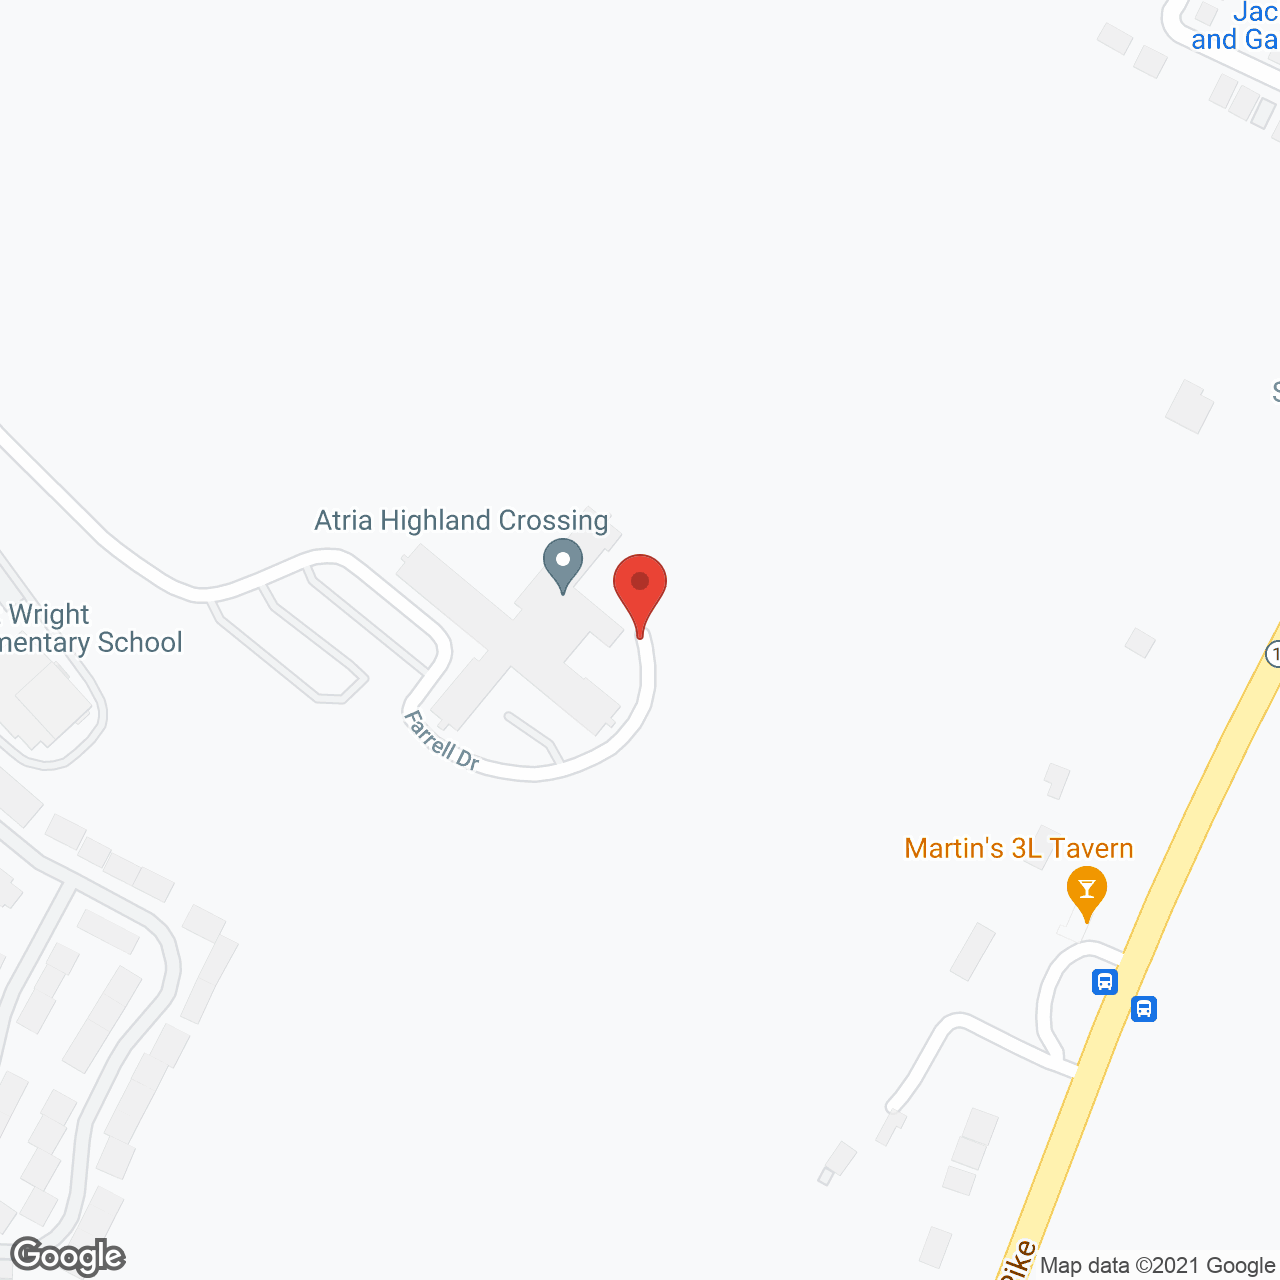 Atria Highland Crossing in google map